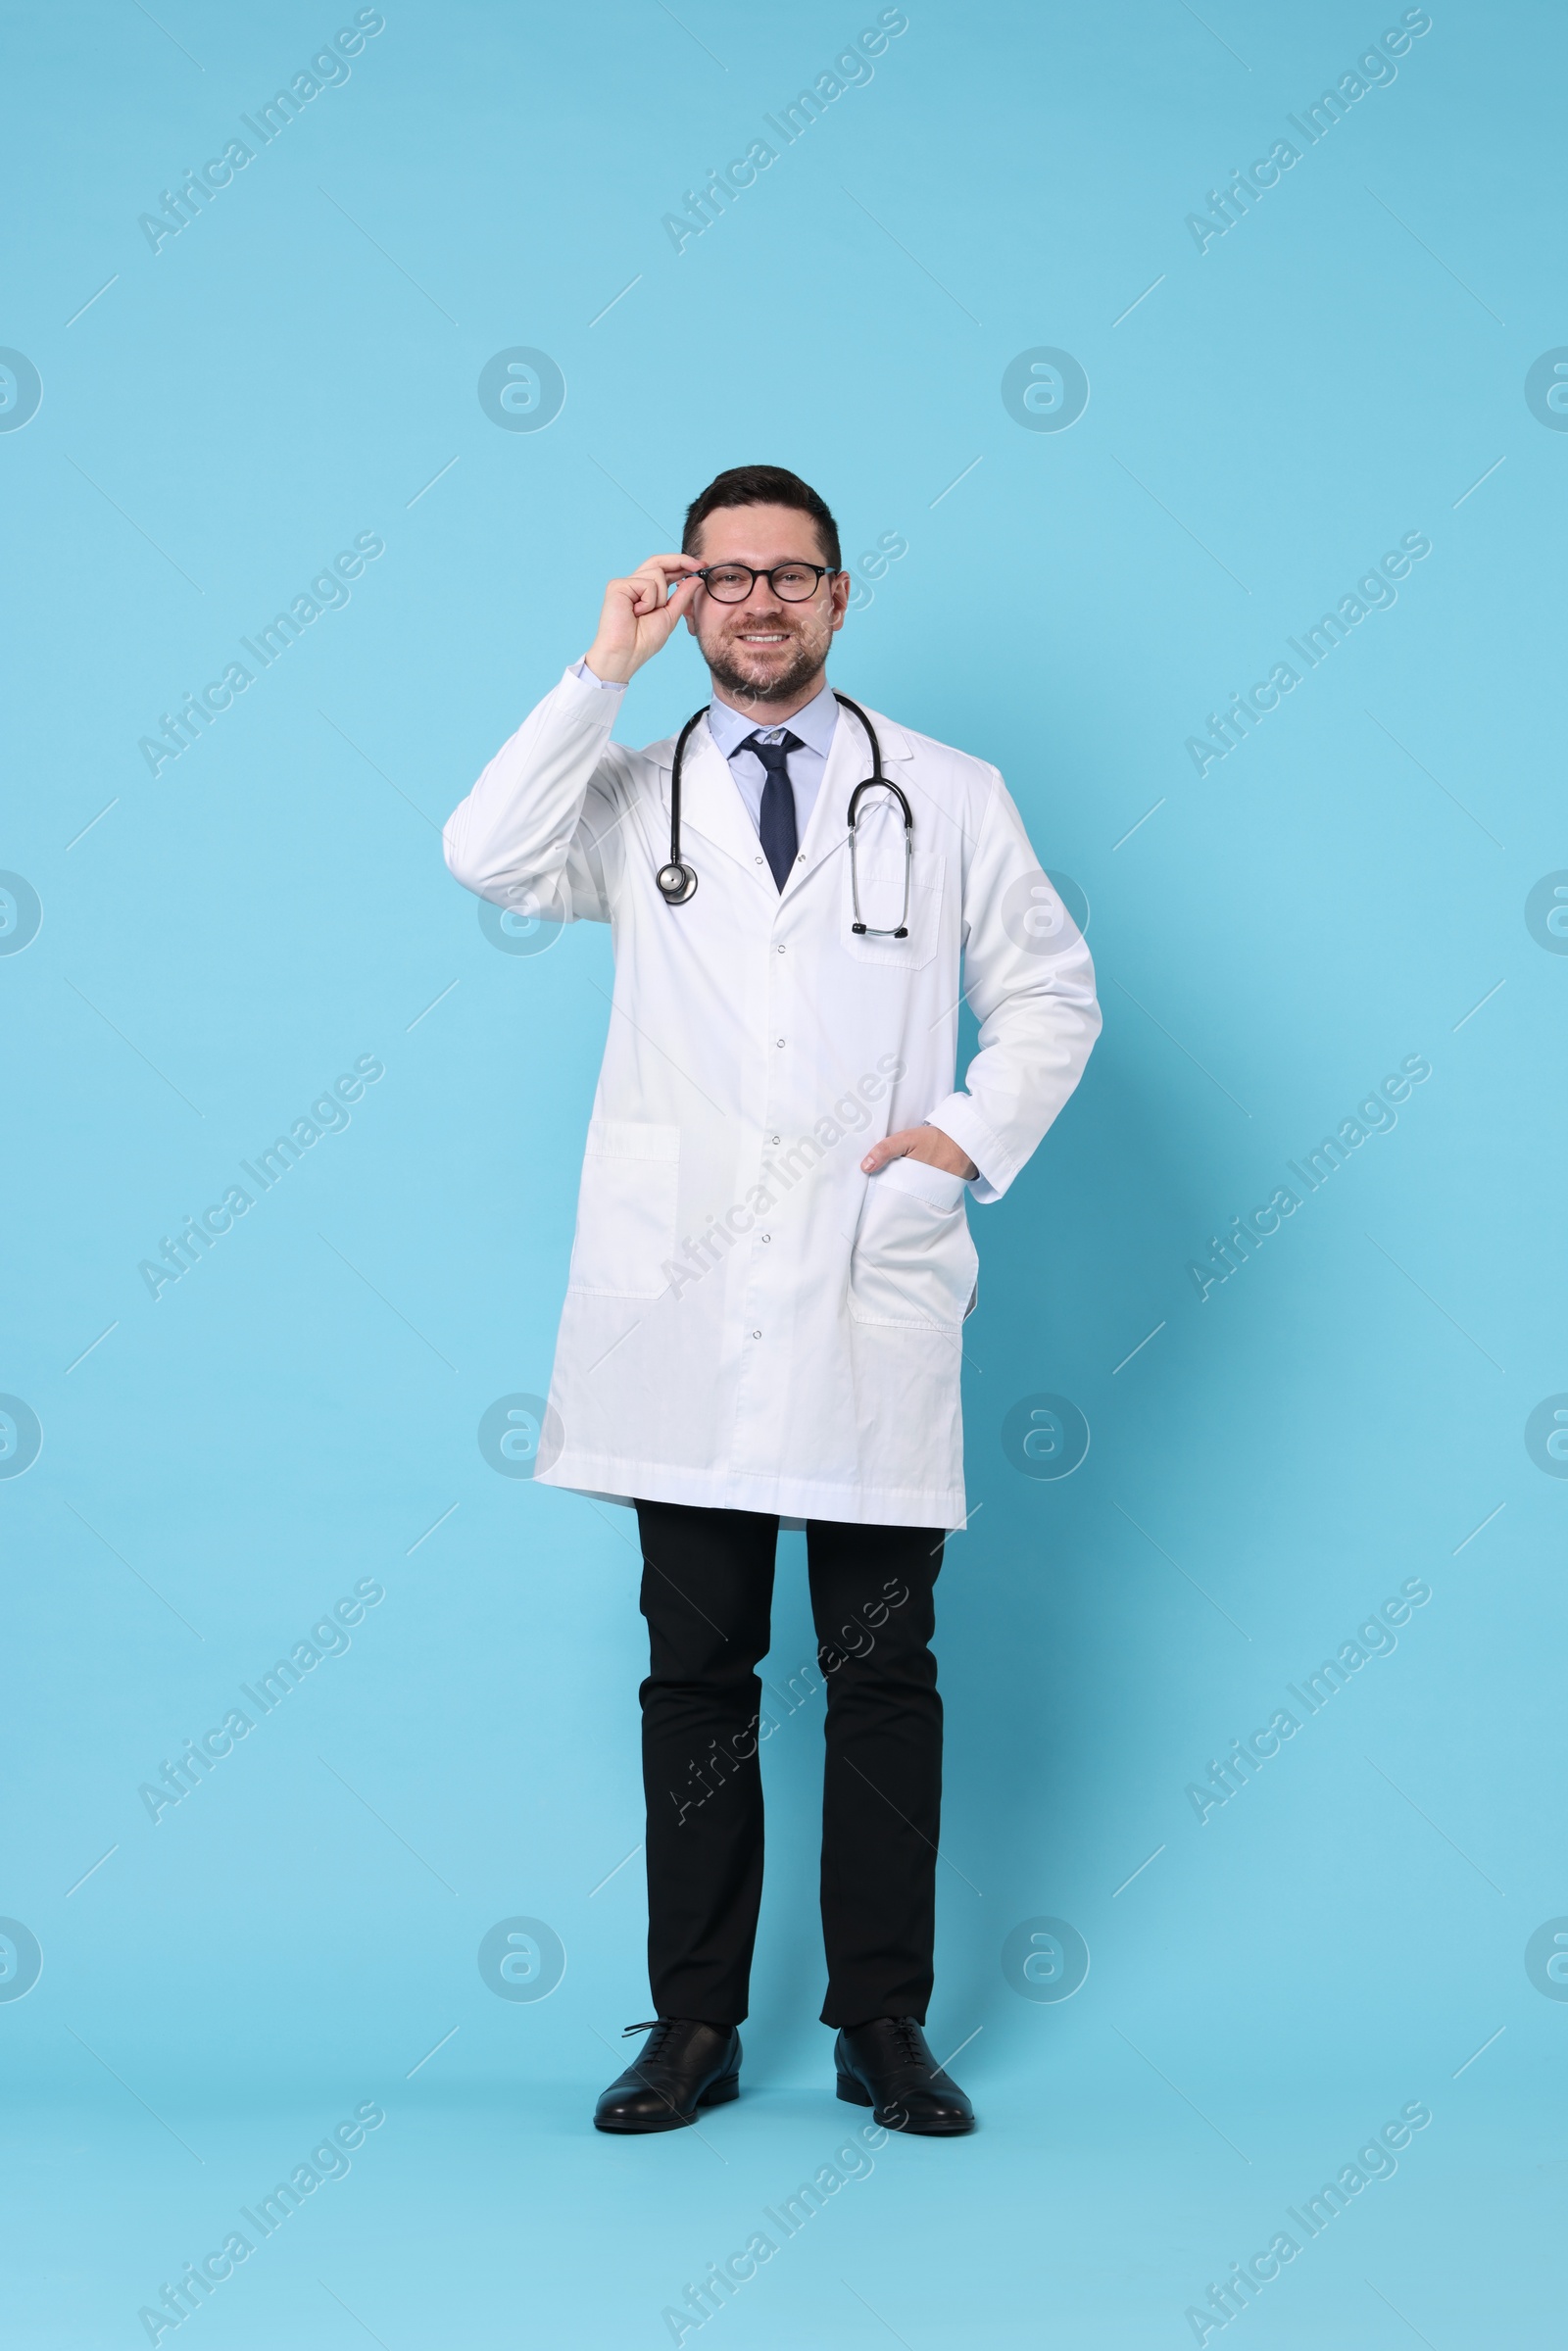 Photo of Full length portrait of smiling doctor on light blue background